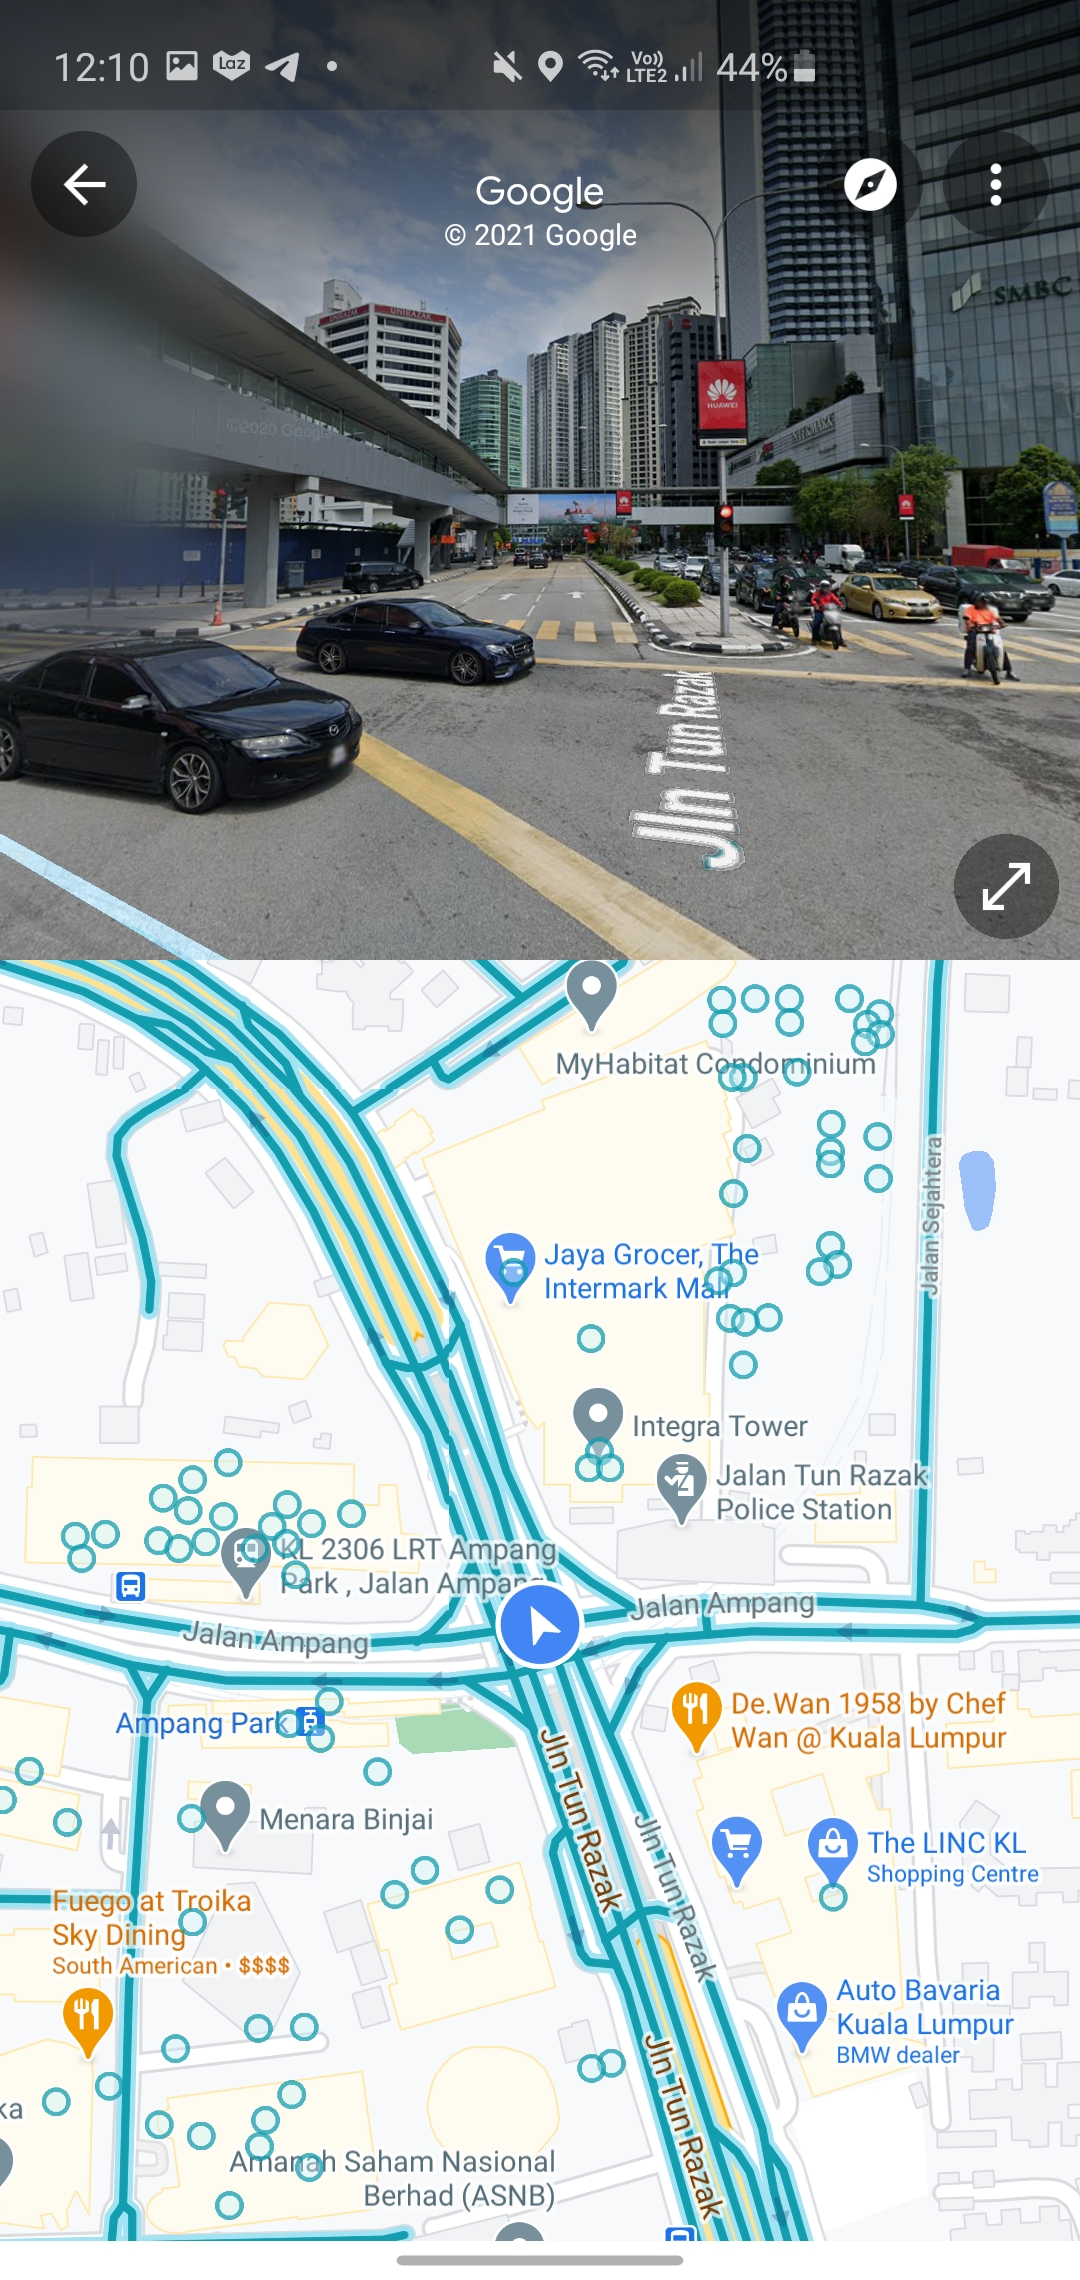 Street view maps